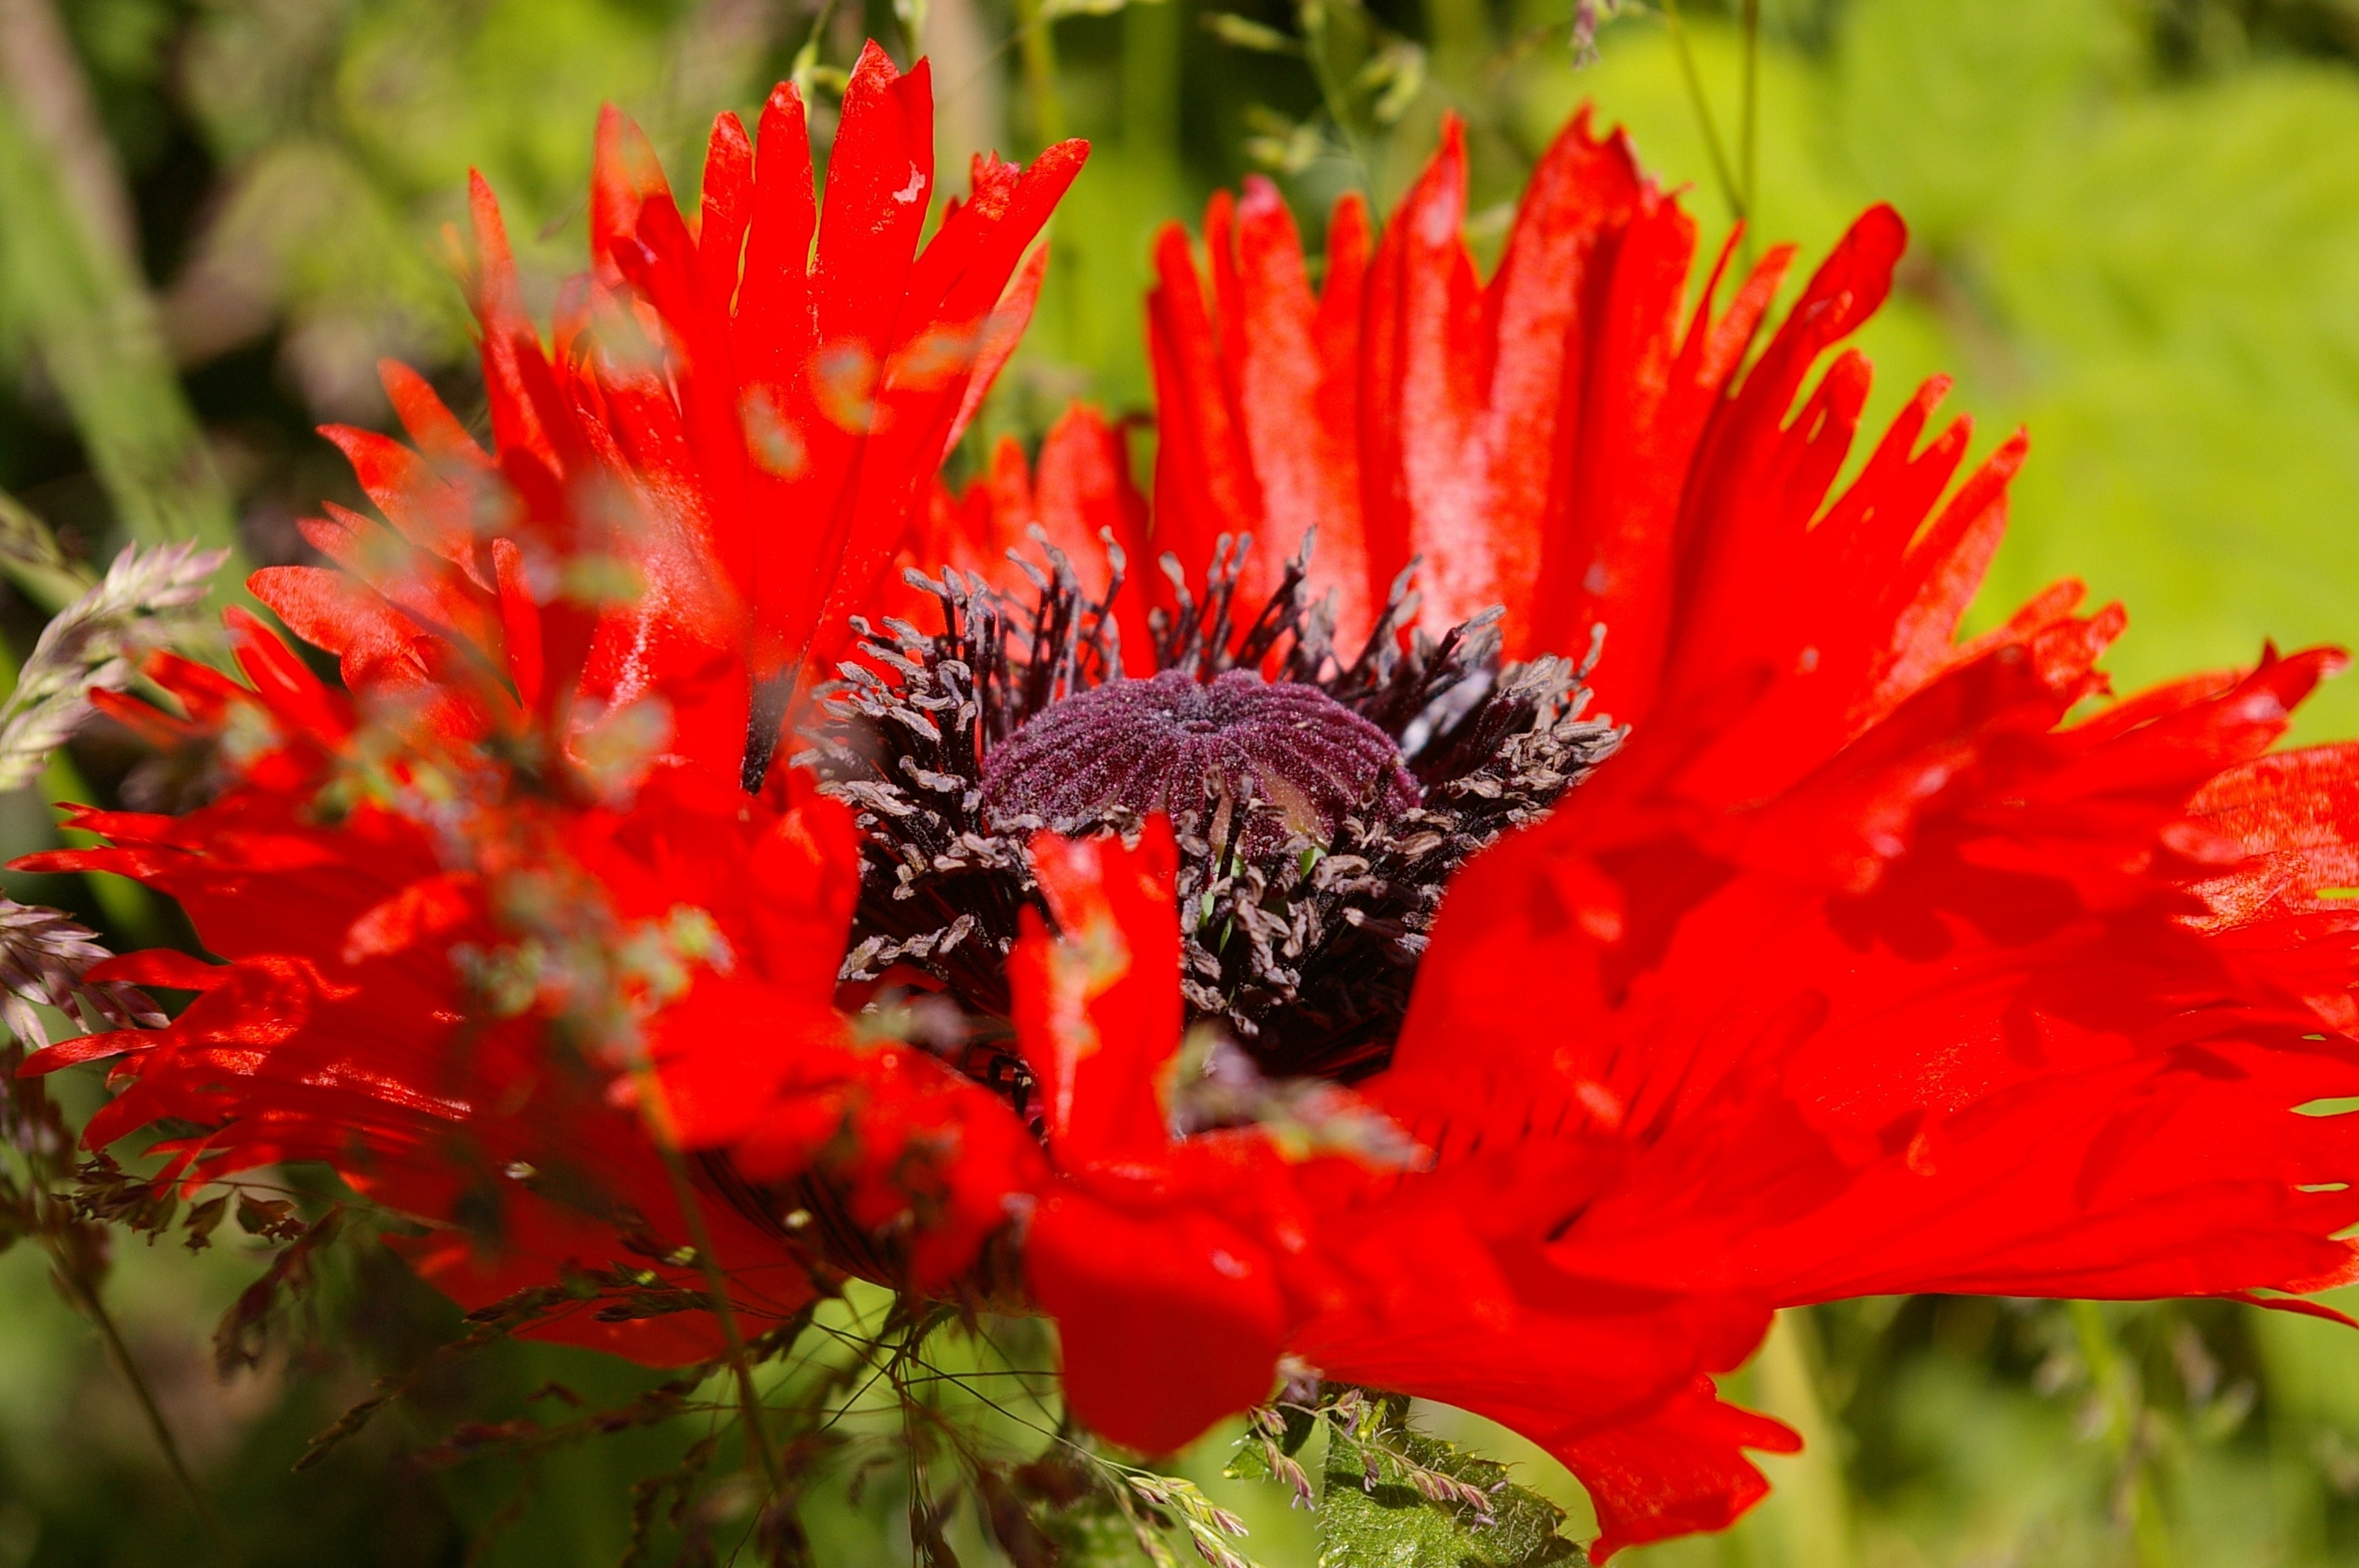 red petal flower with black stigma